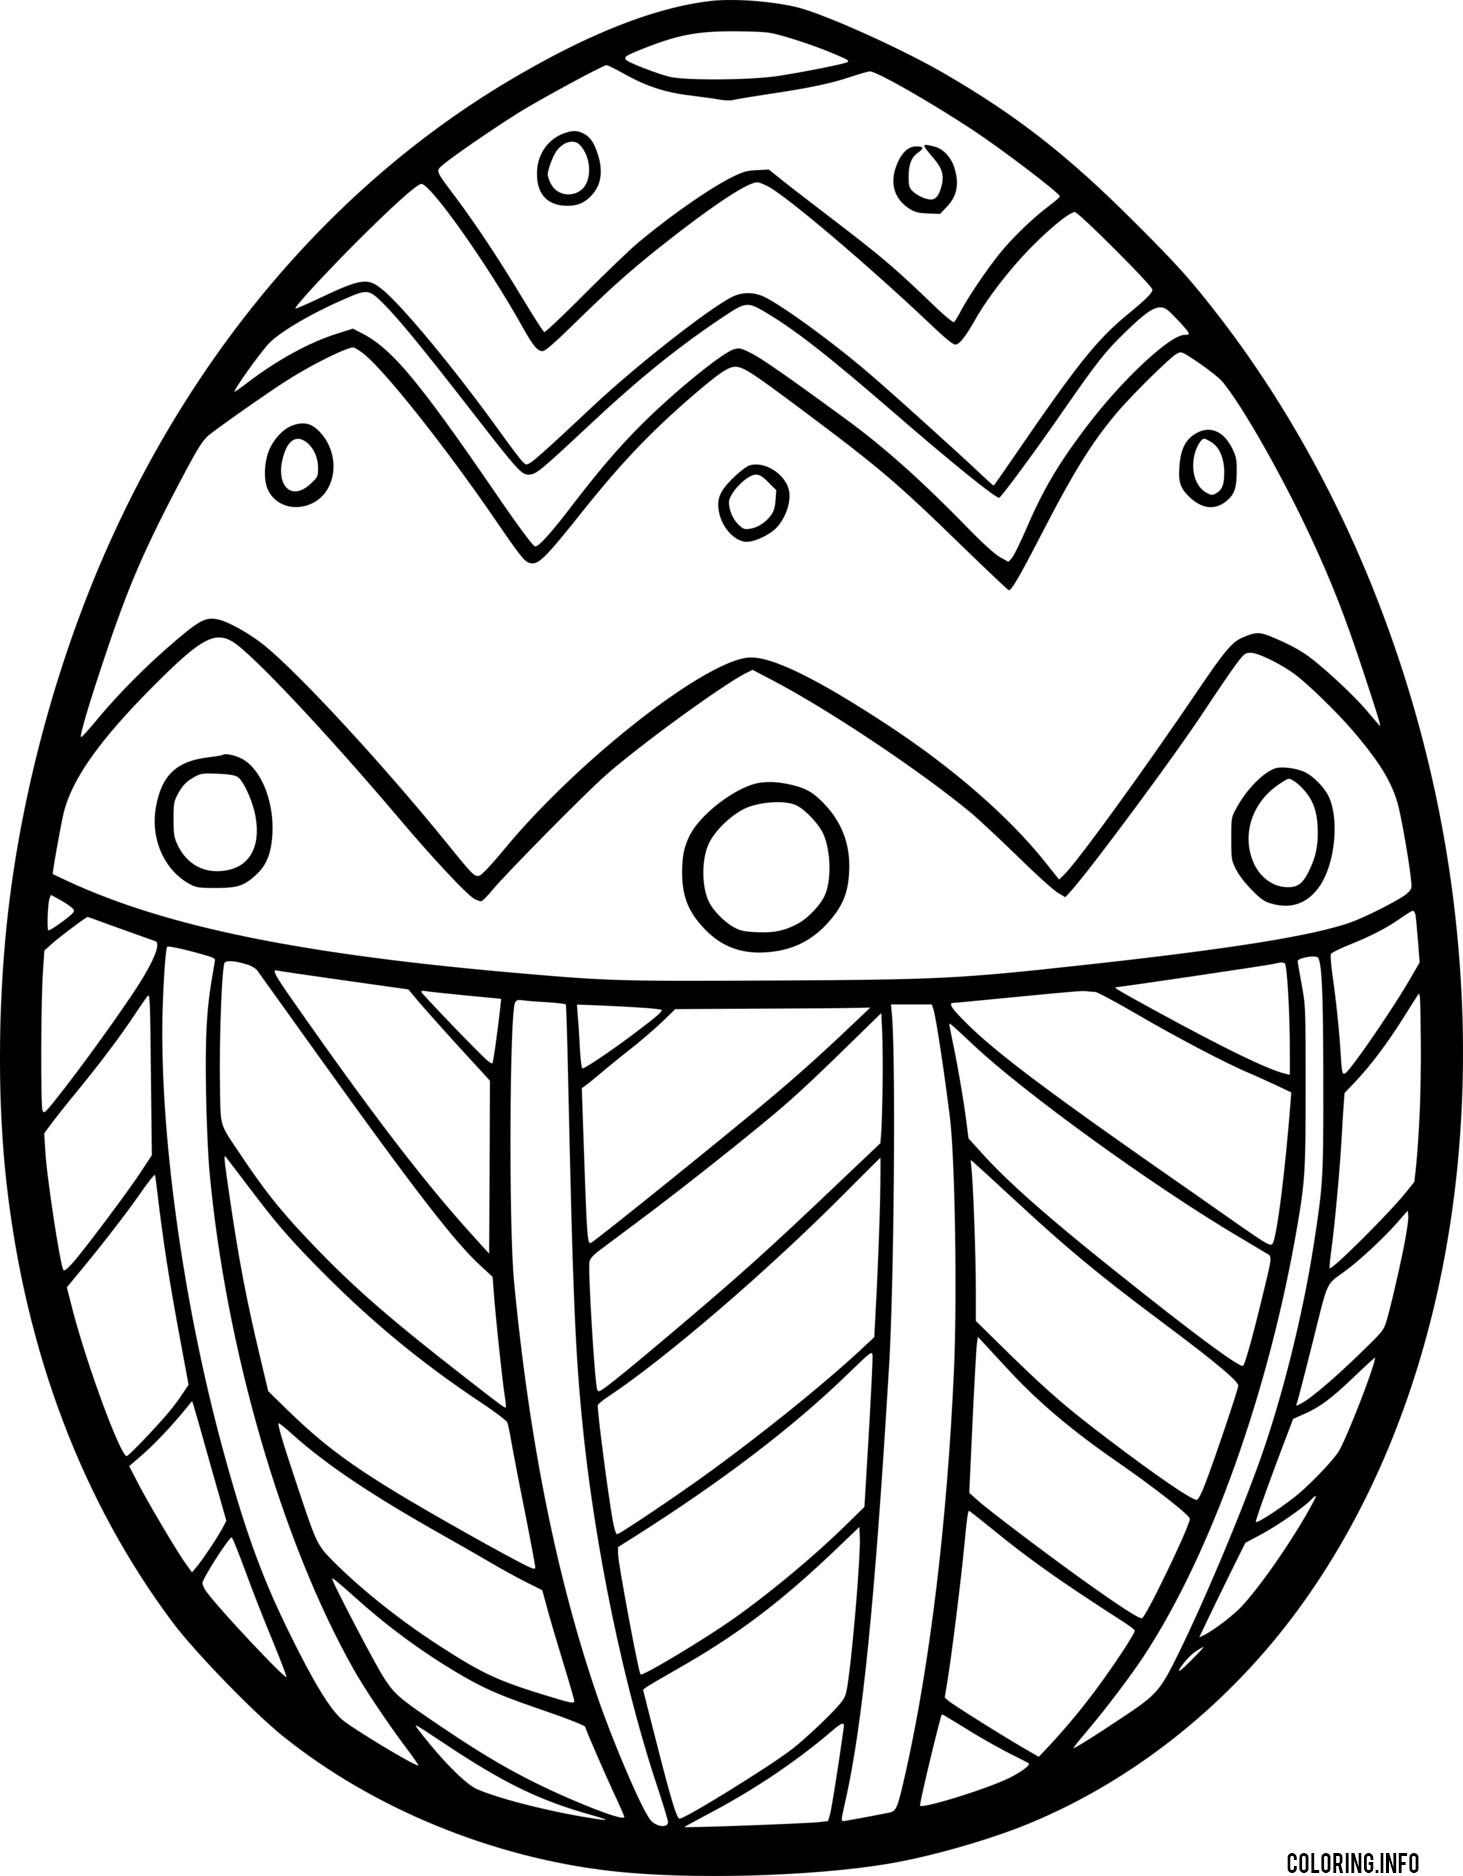 Easter Egg With Leaf Patterns coloring